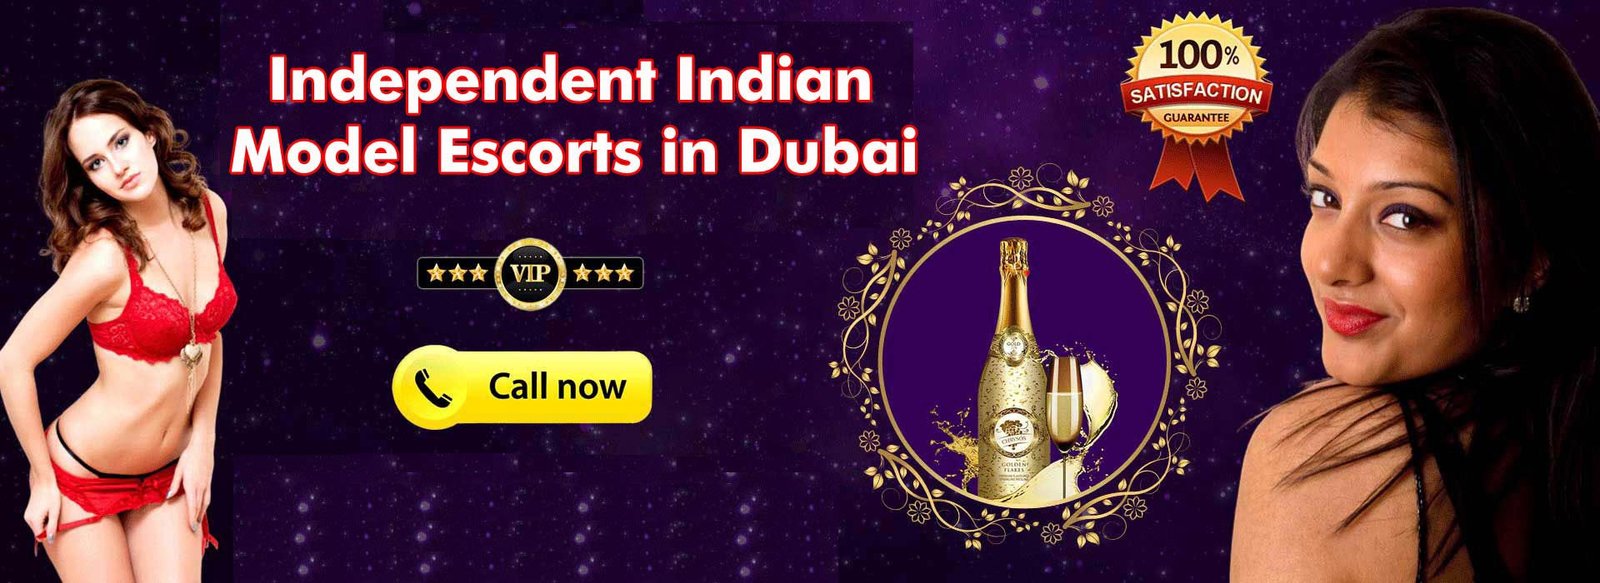 Independent Indian Escorts Dubai